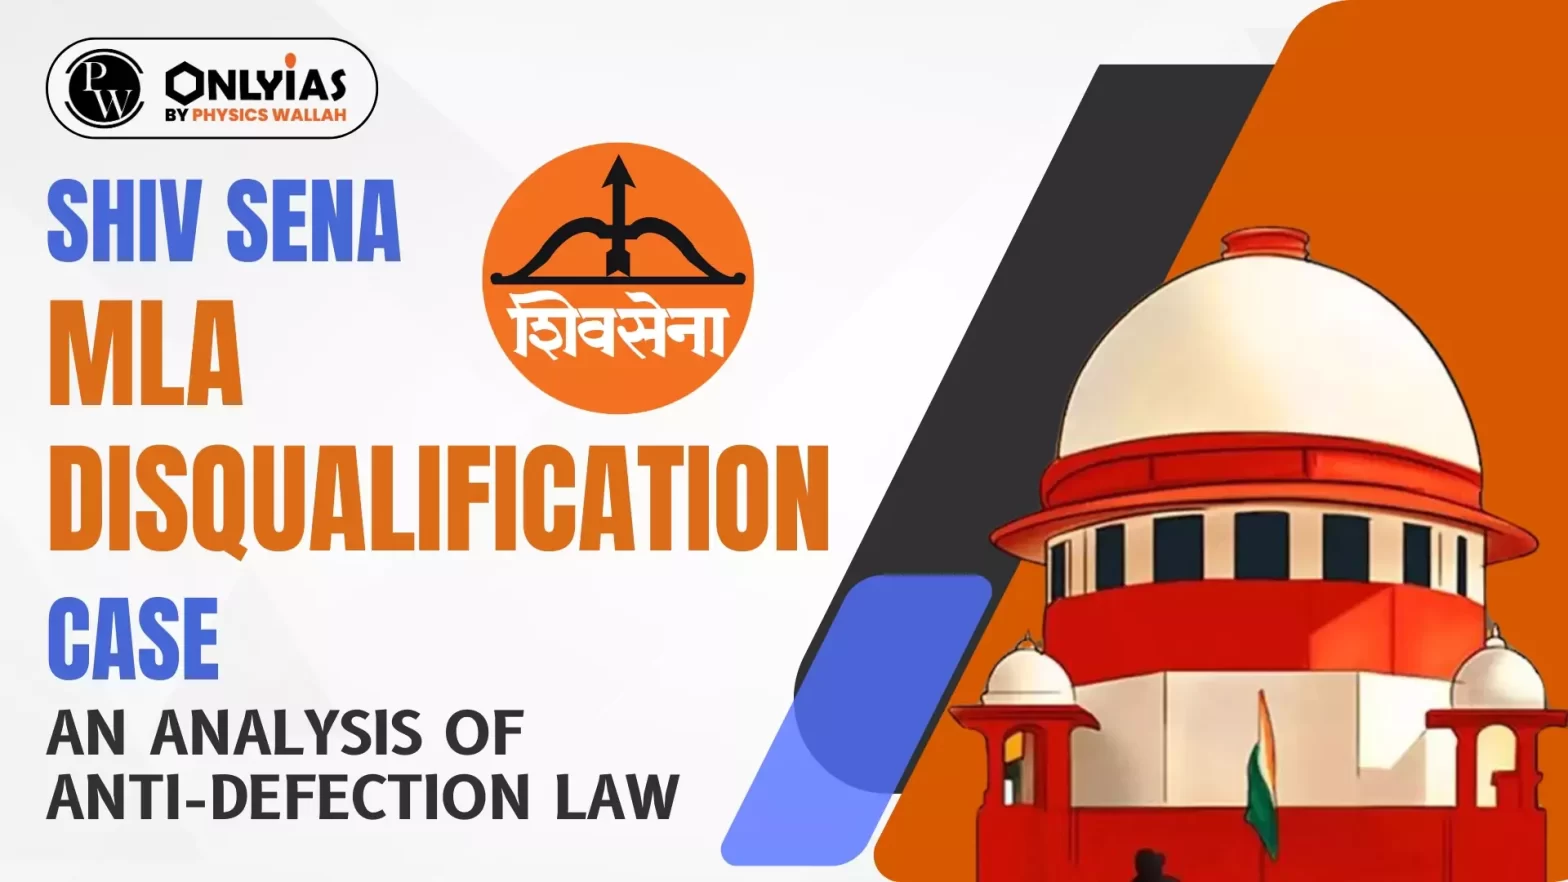 Shiv Sena MLA Disqualification Case: An Analysis of Anti-Defection Law